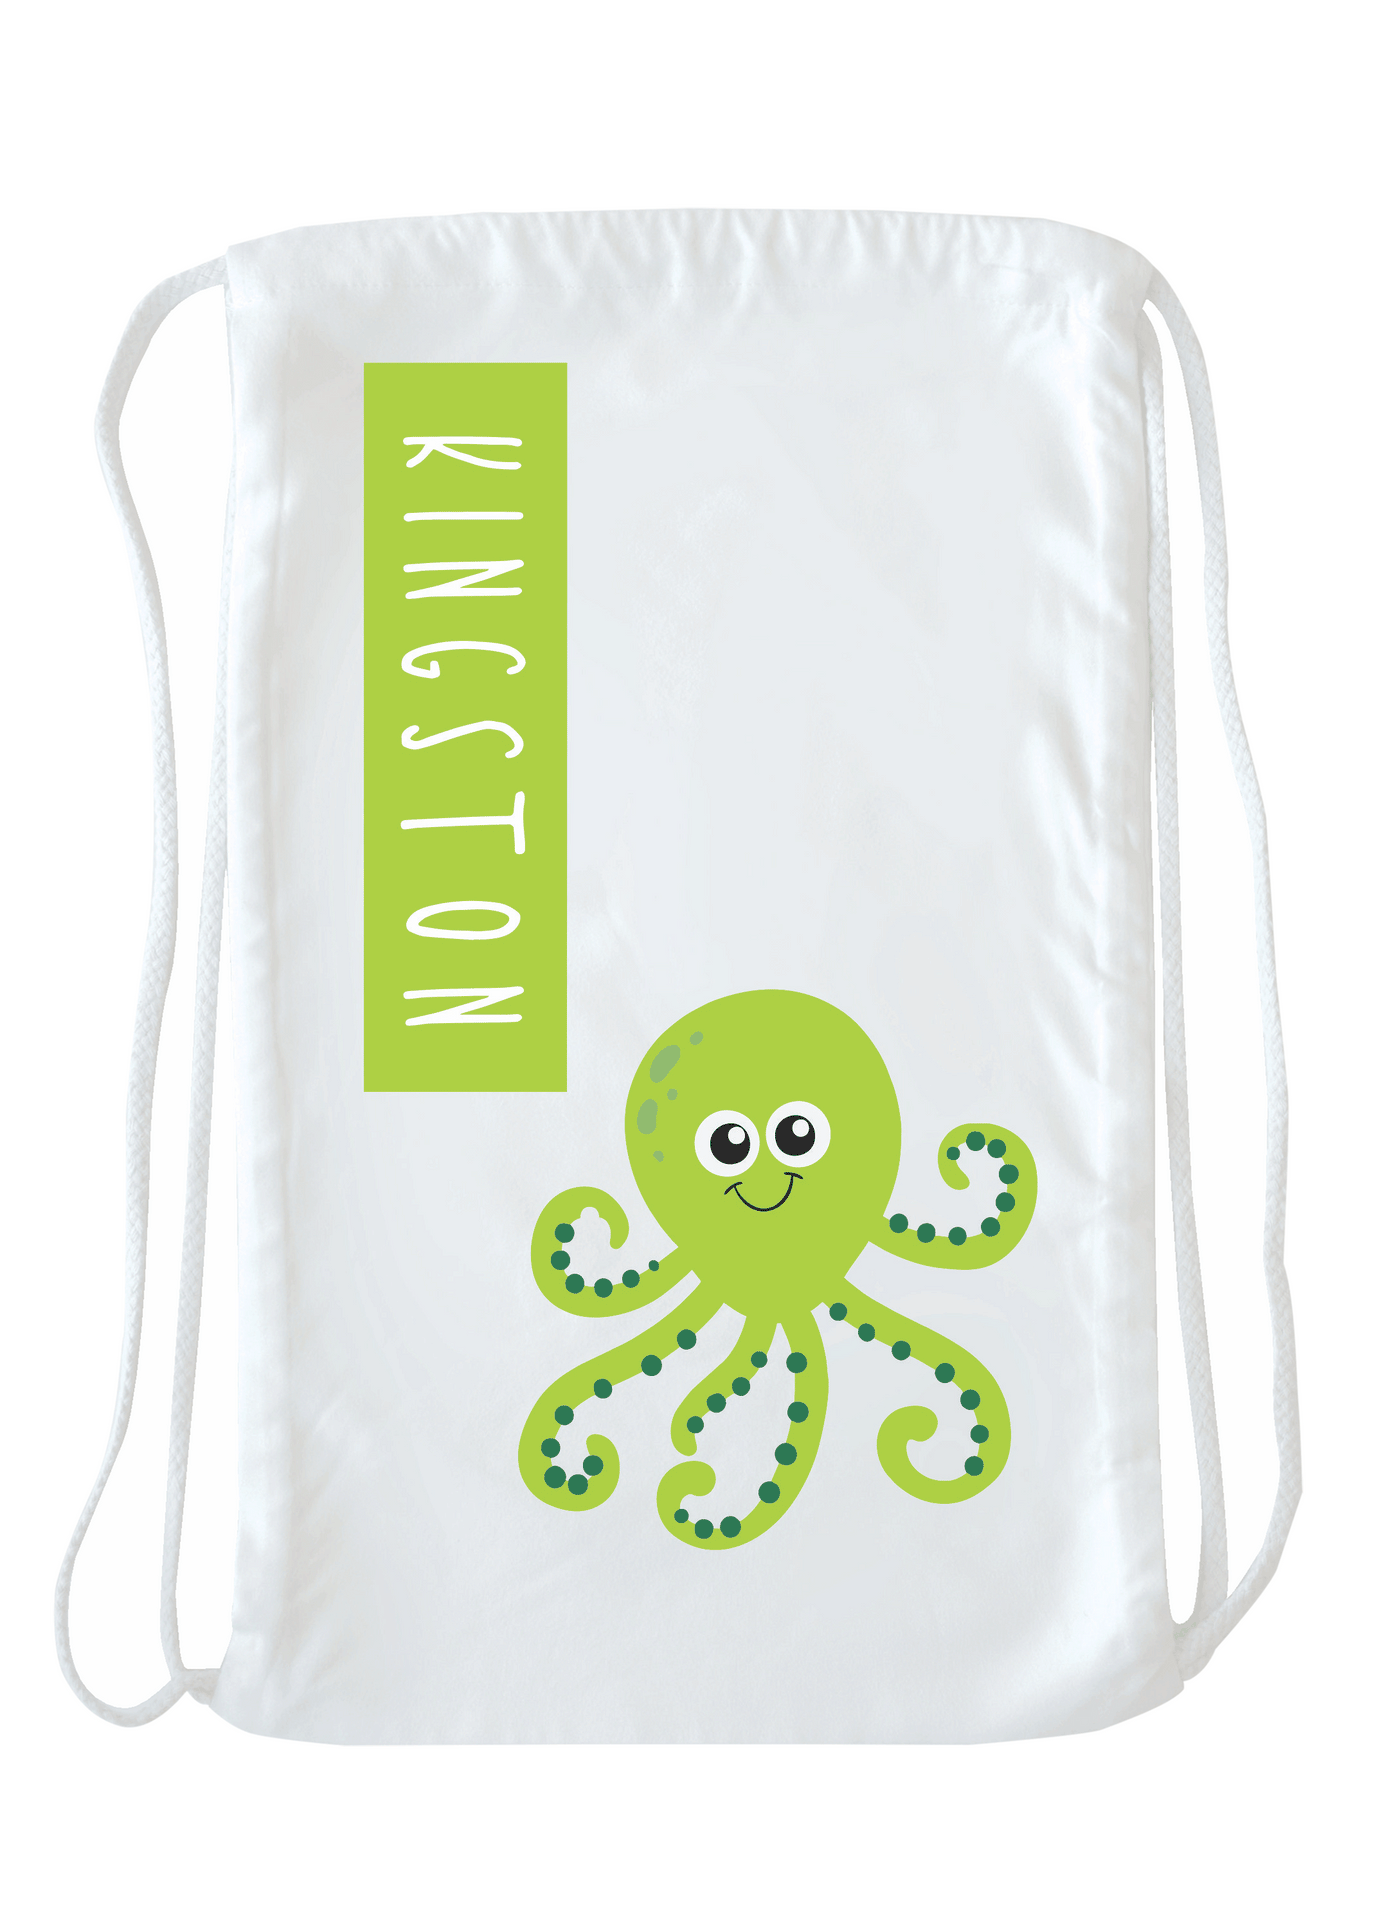 Octopus - Green Bag